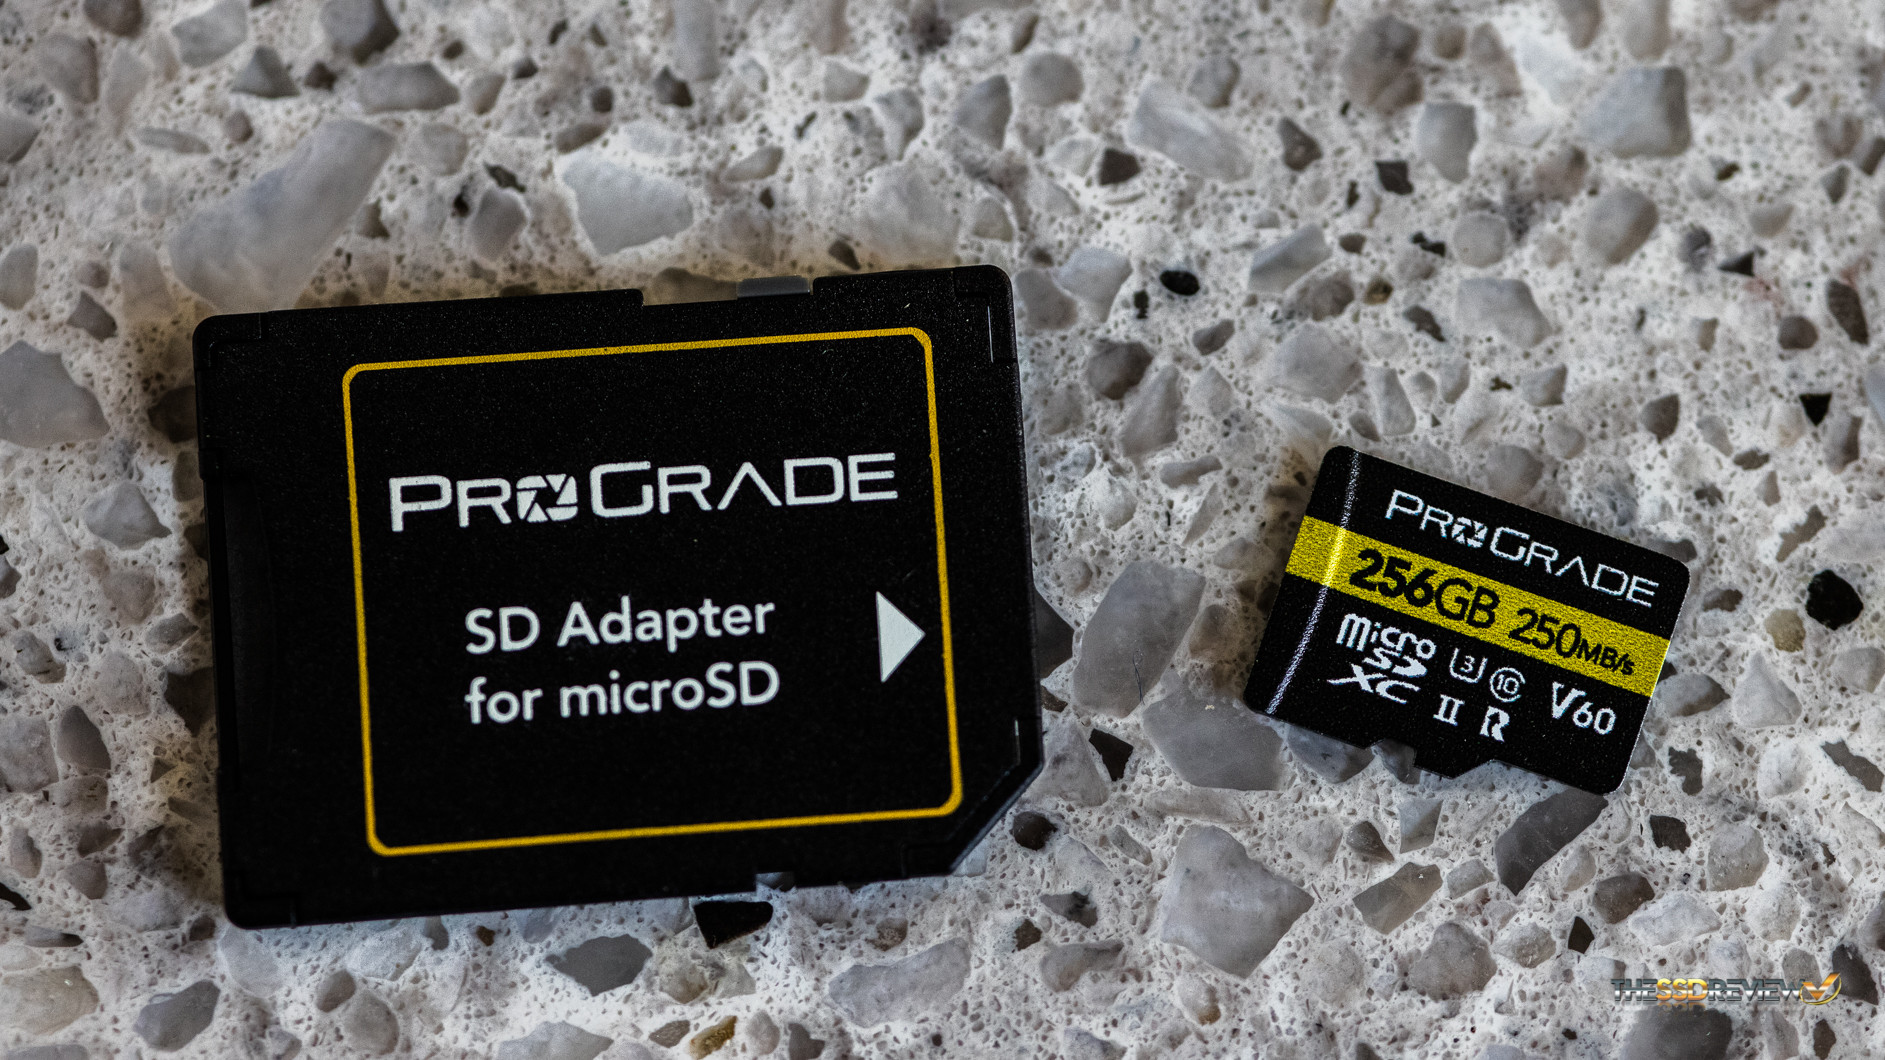 ProGrade Gold MicroSD UHS-II V60 Memory Card and Reader